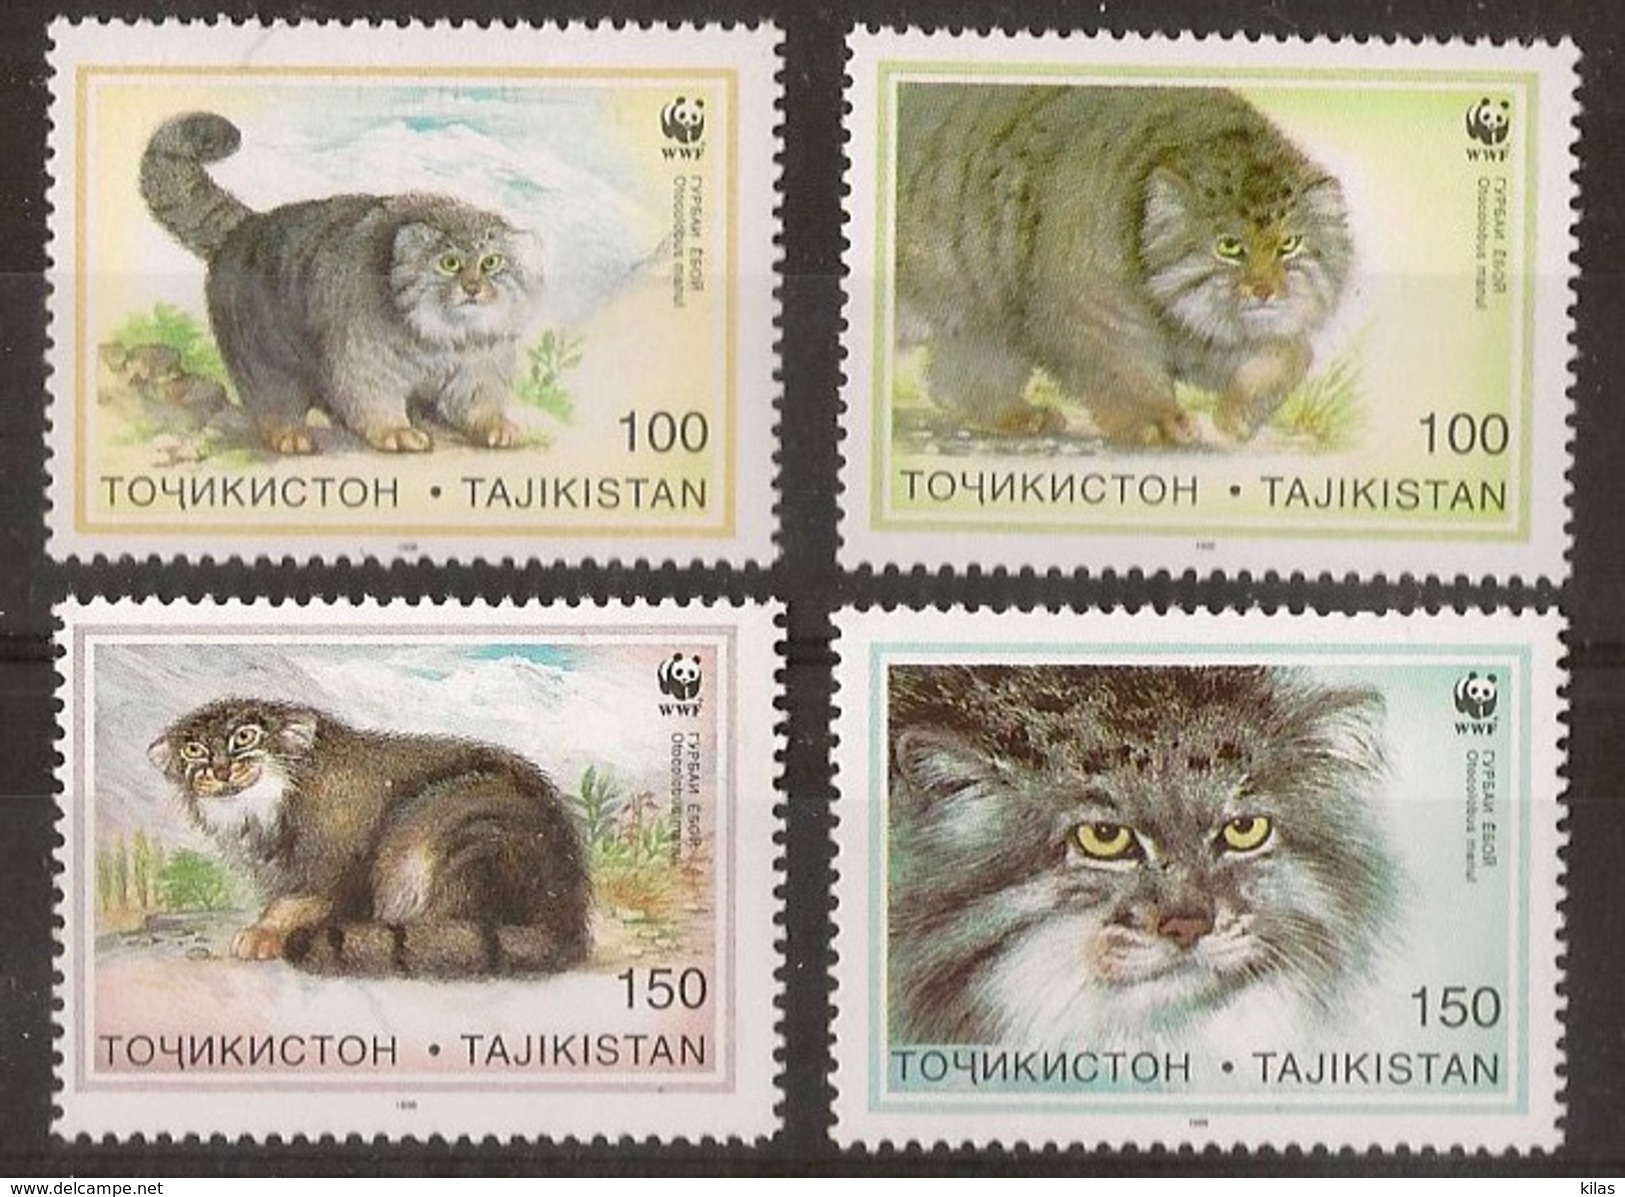 TAJIKISTAN WWF, 1996 Cats - Unused Stamps